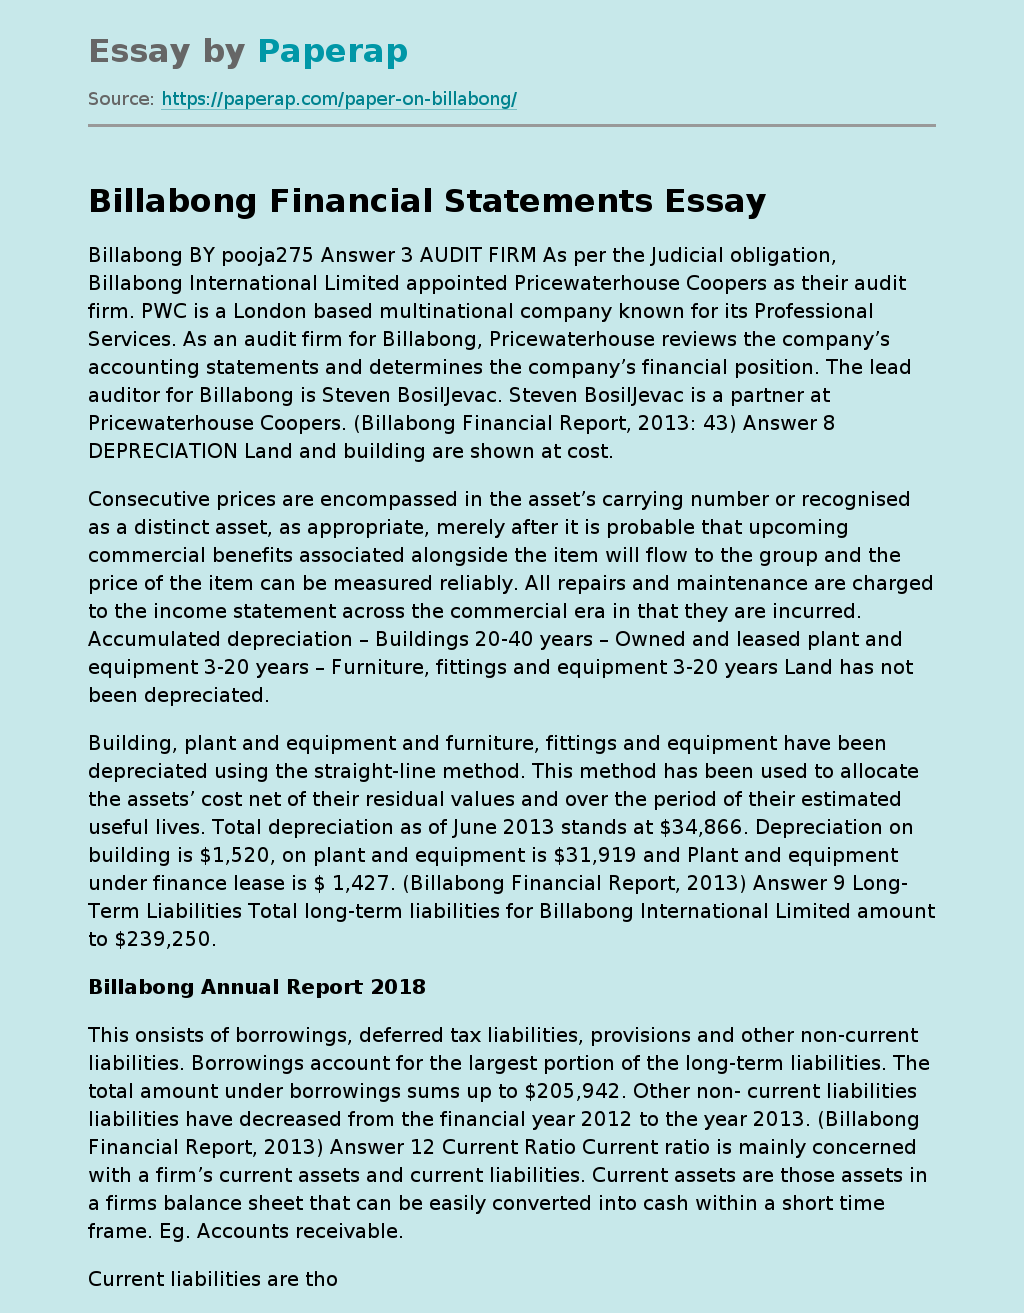 Billabong Financial Statements